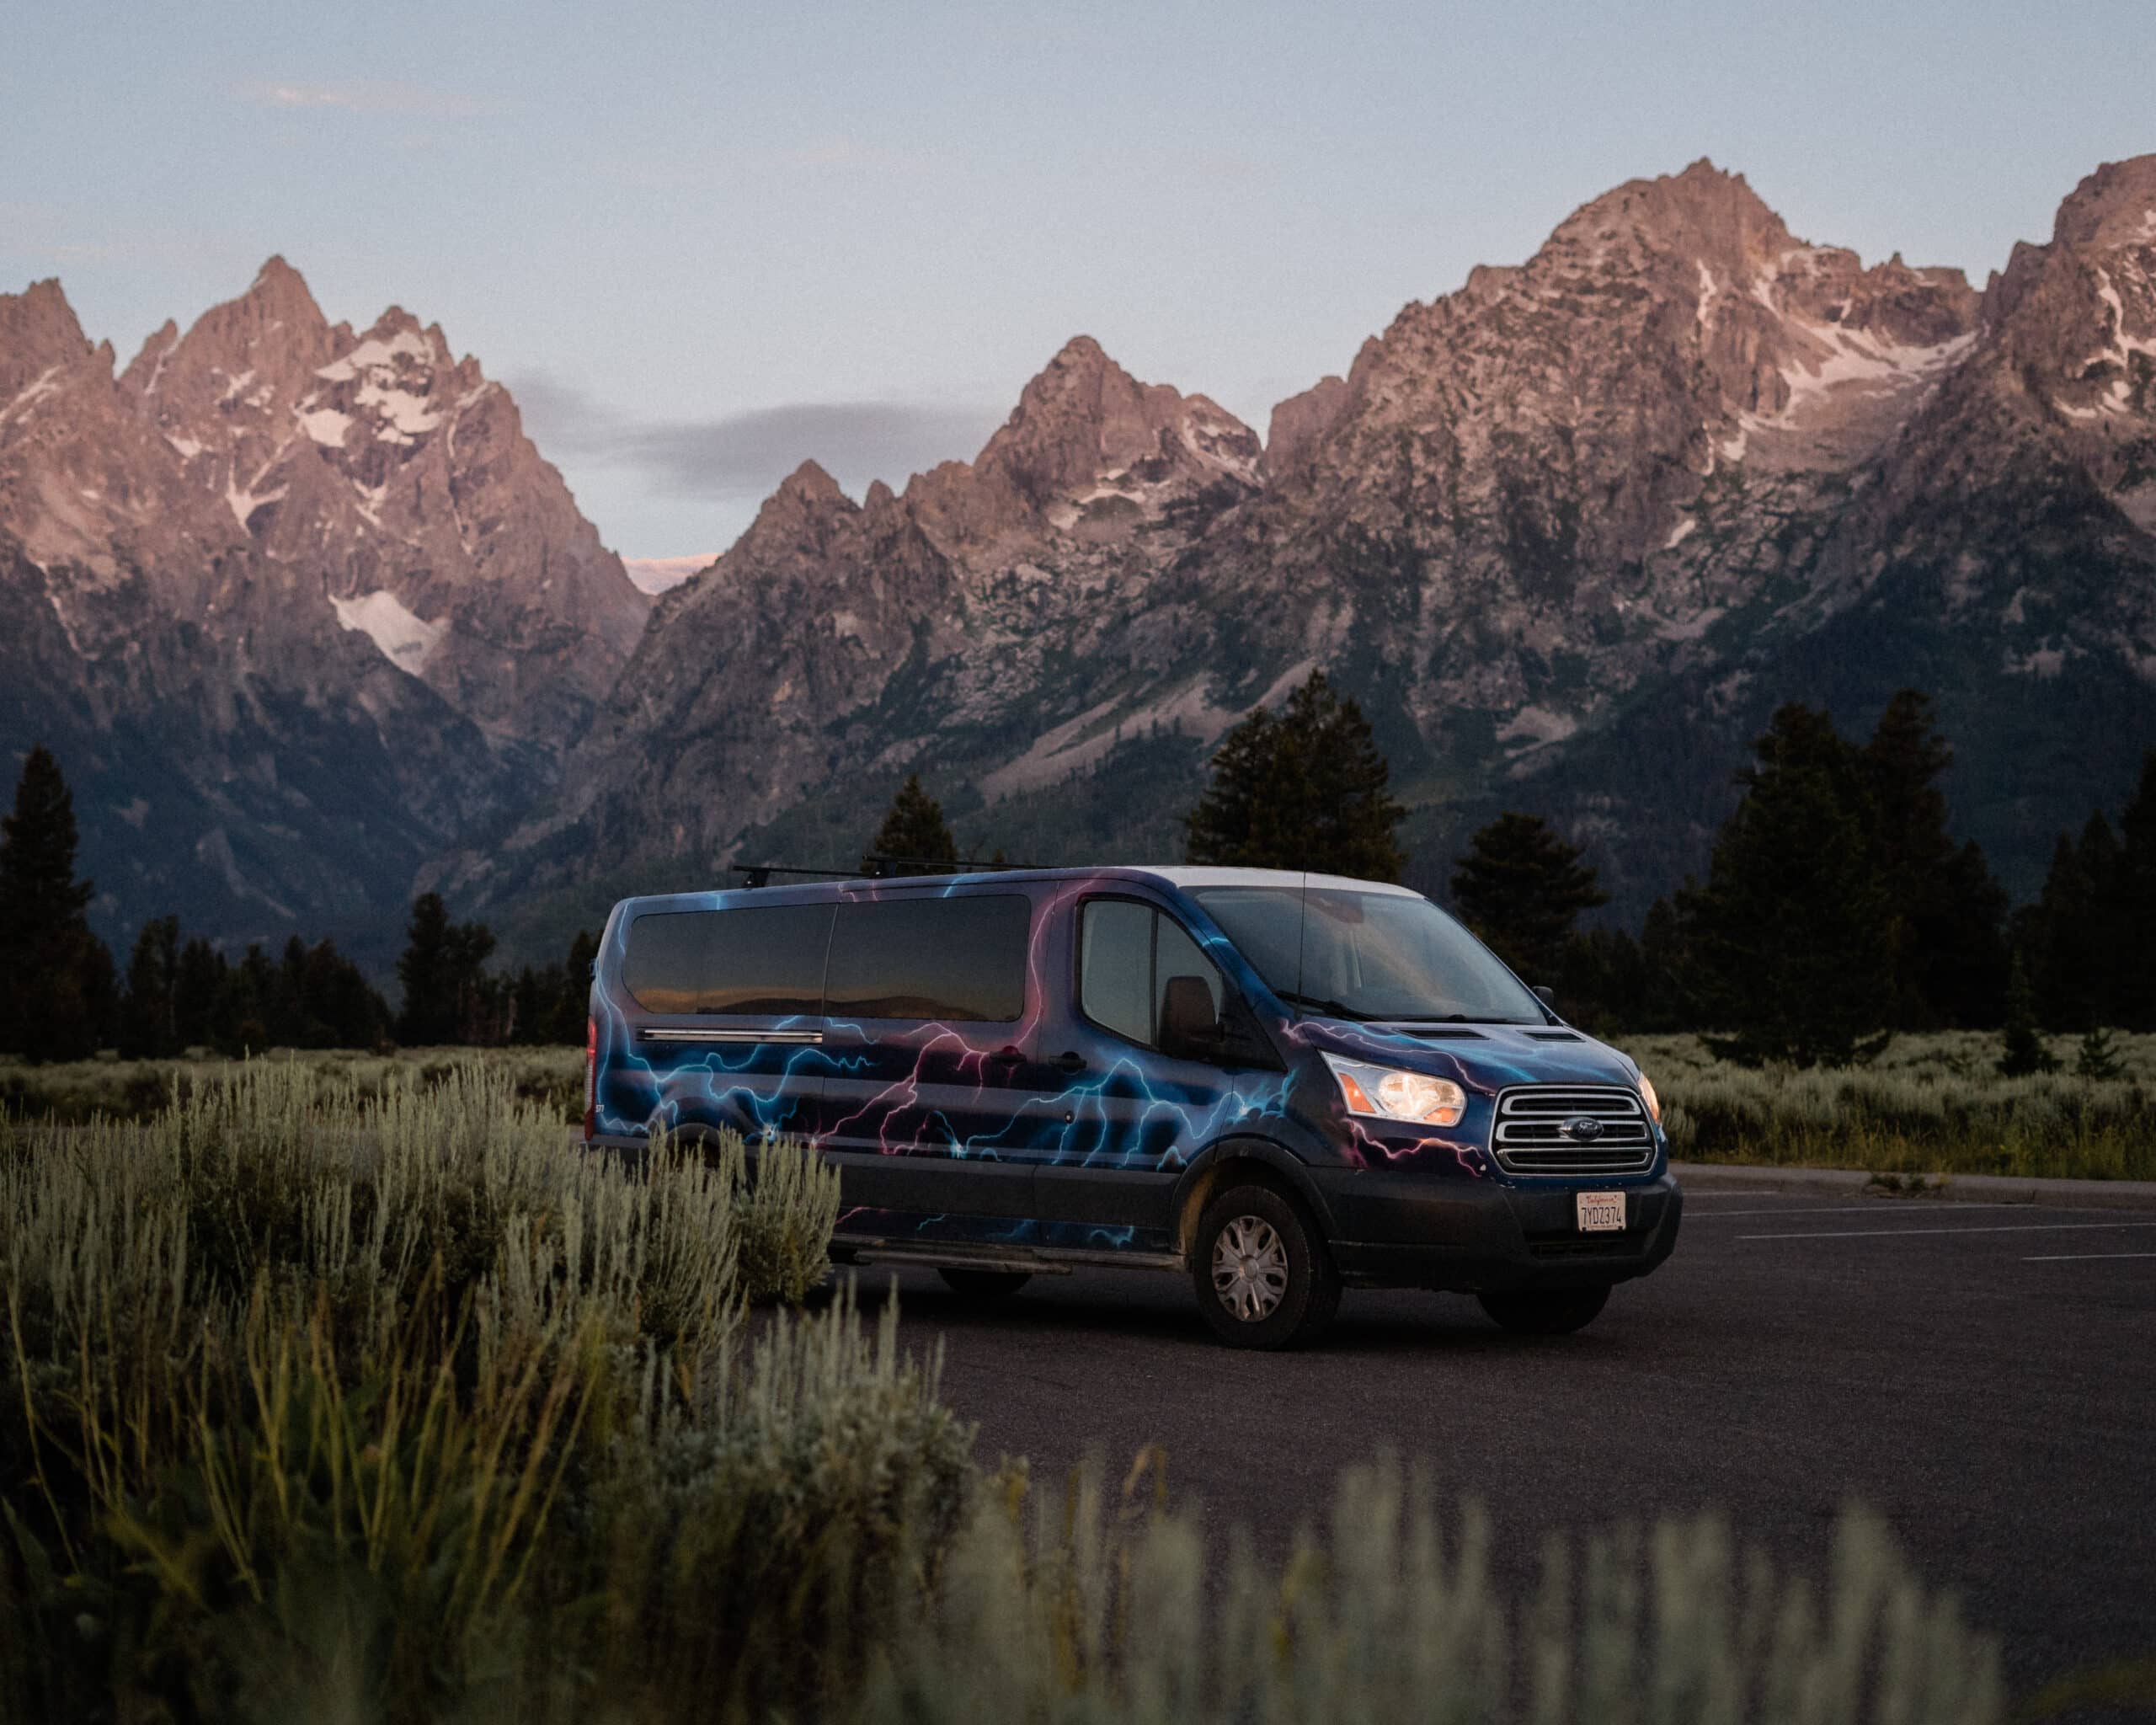 Take 40% off camper van rentals with Escape Camper Van's spring sale.